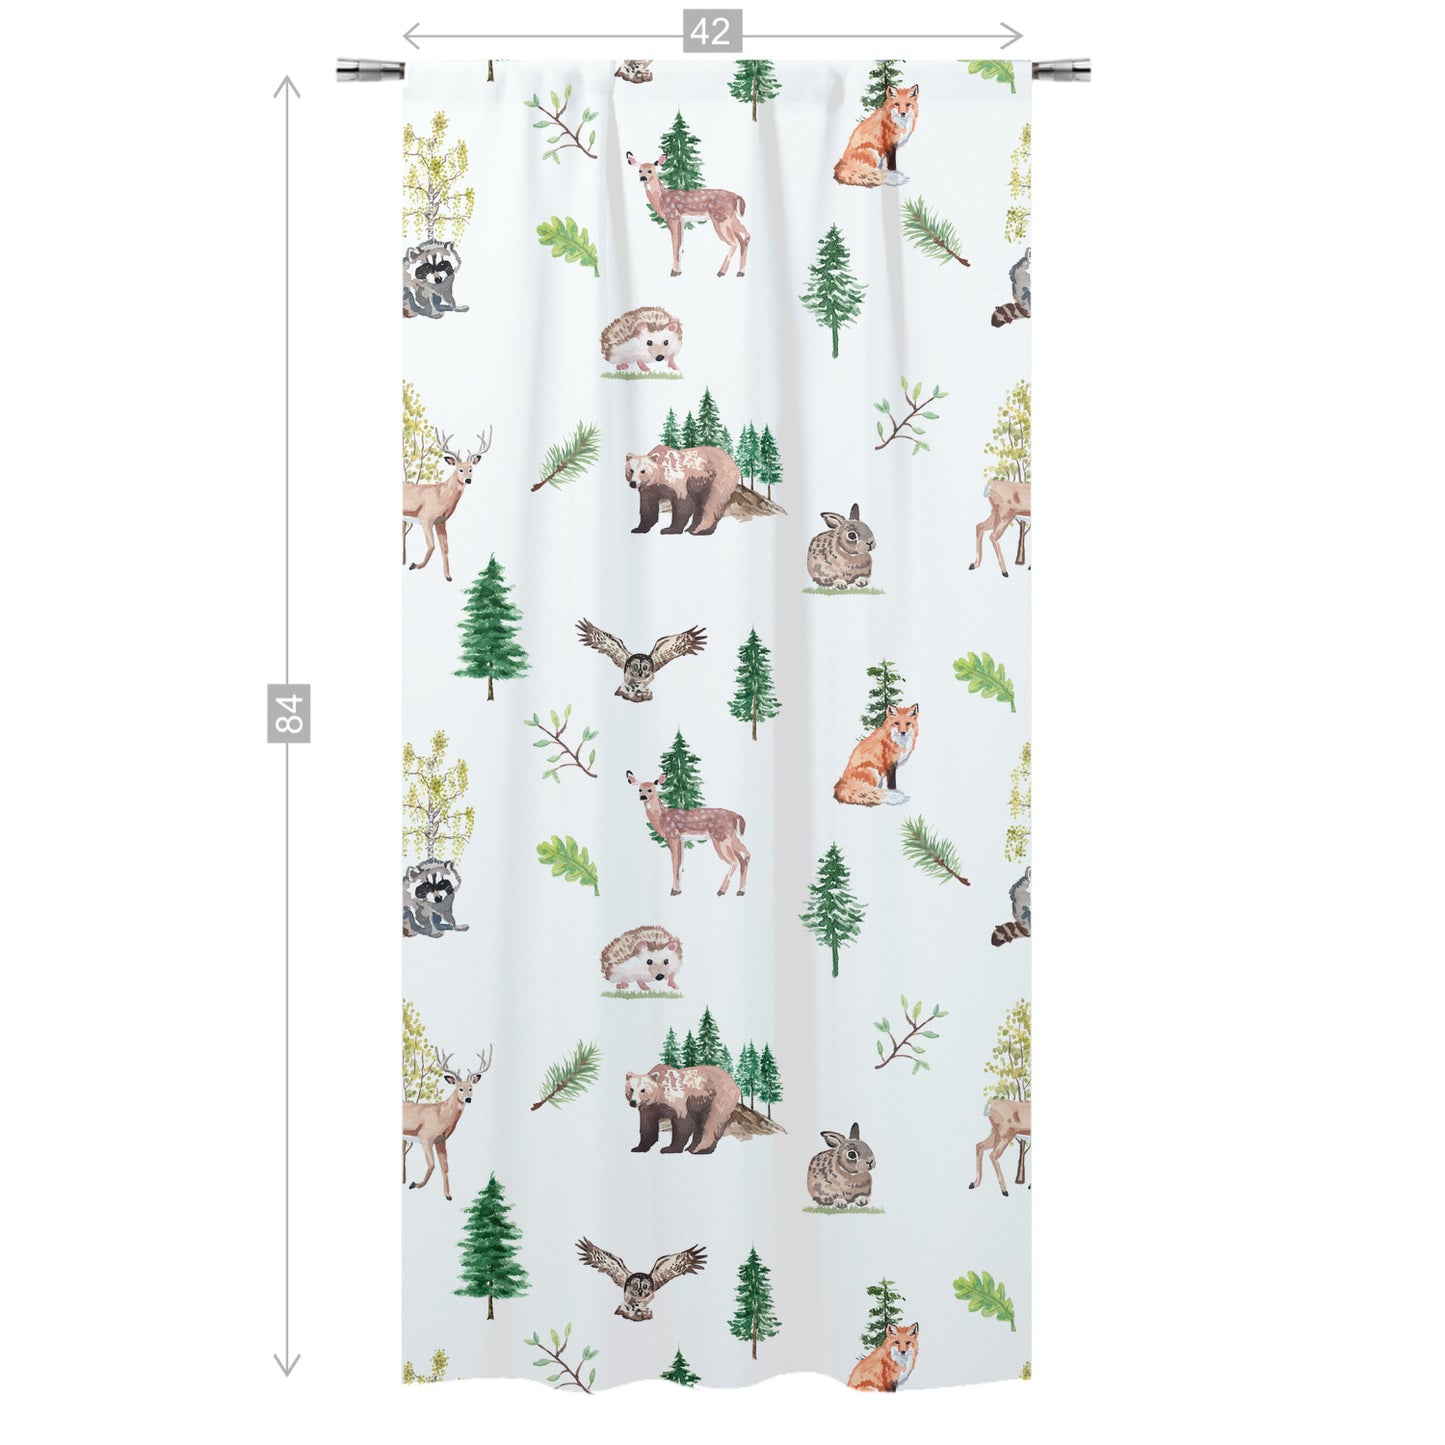 Forest Animals Curtain Single Panel, Woodland Nursery Decor - Wildlife